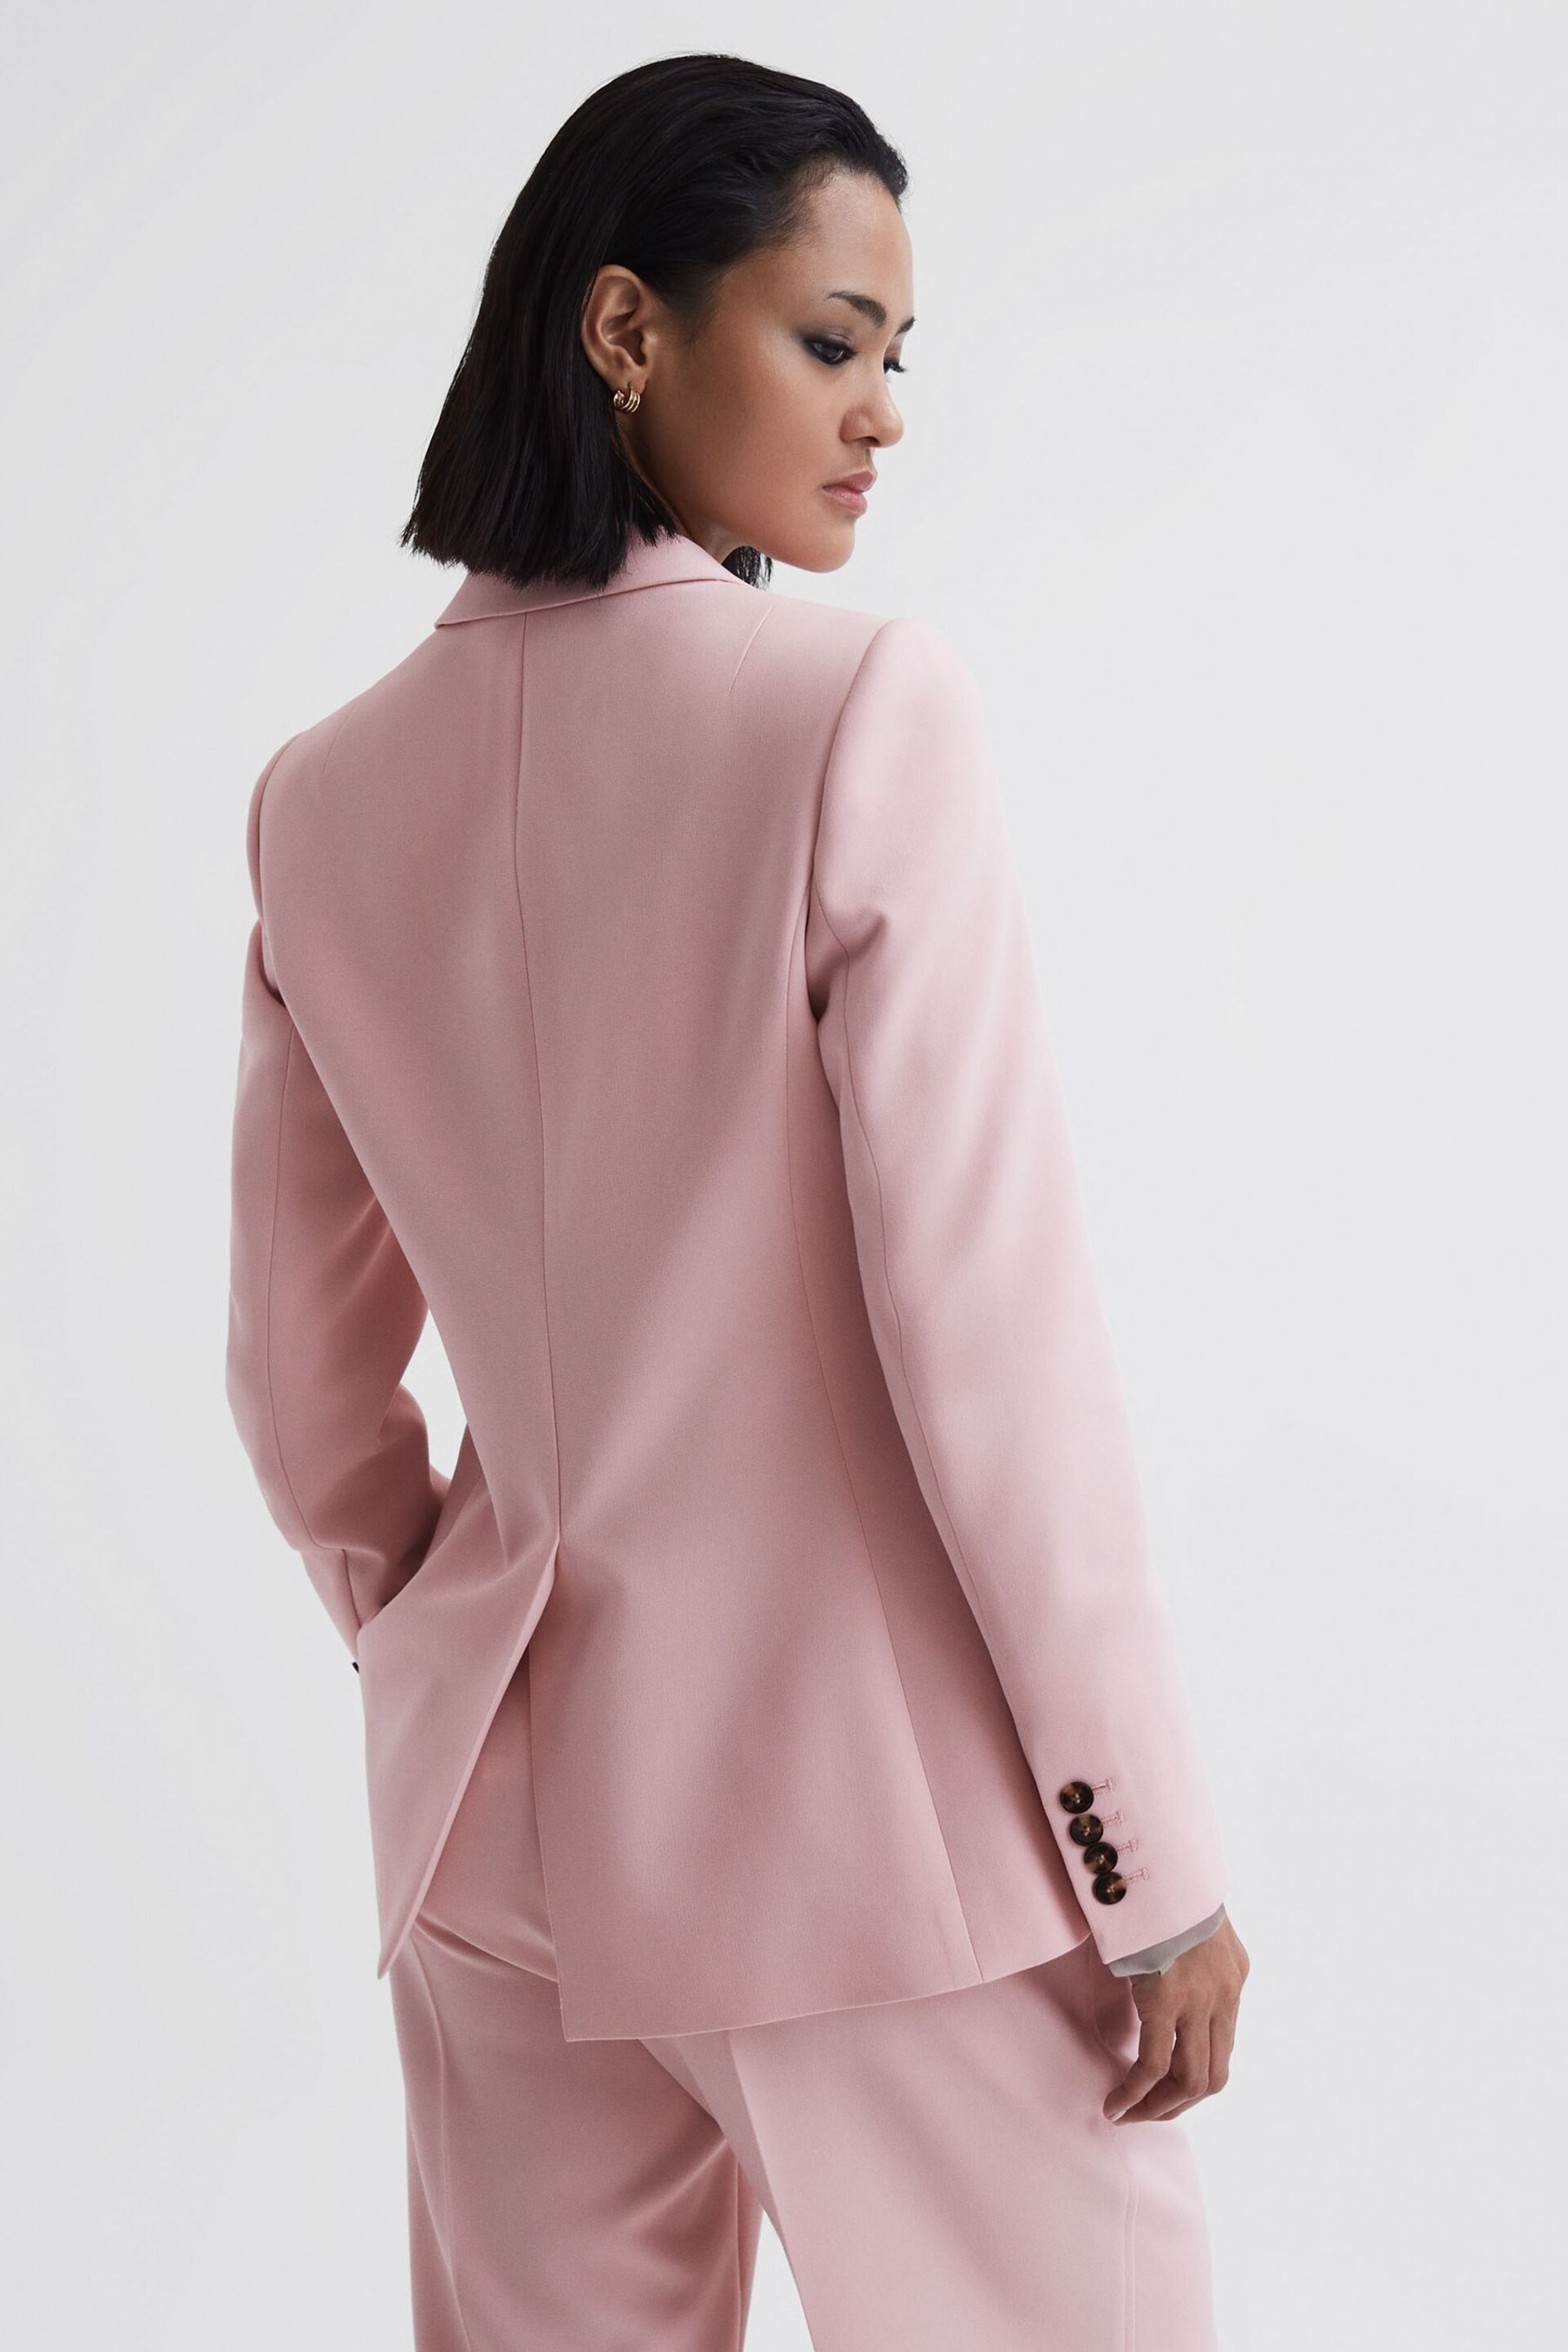 Reiss Pink Marina Petite Single Breasted Blazer - Image 5 of 6